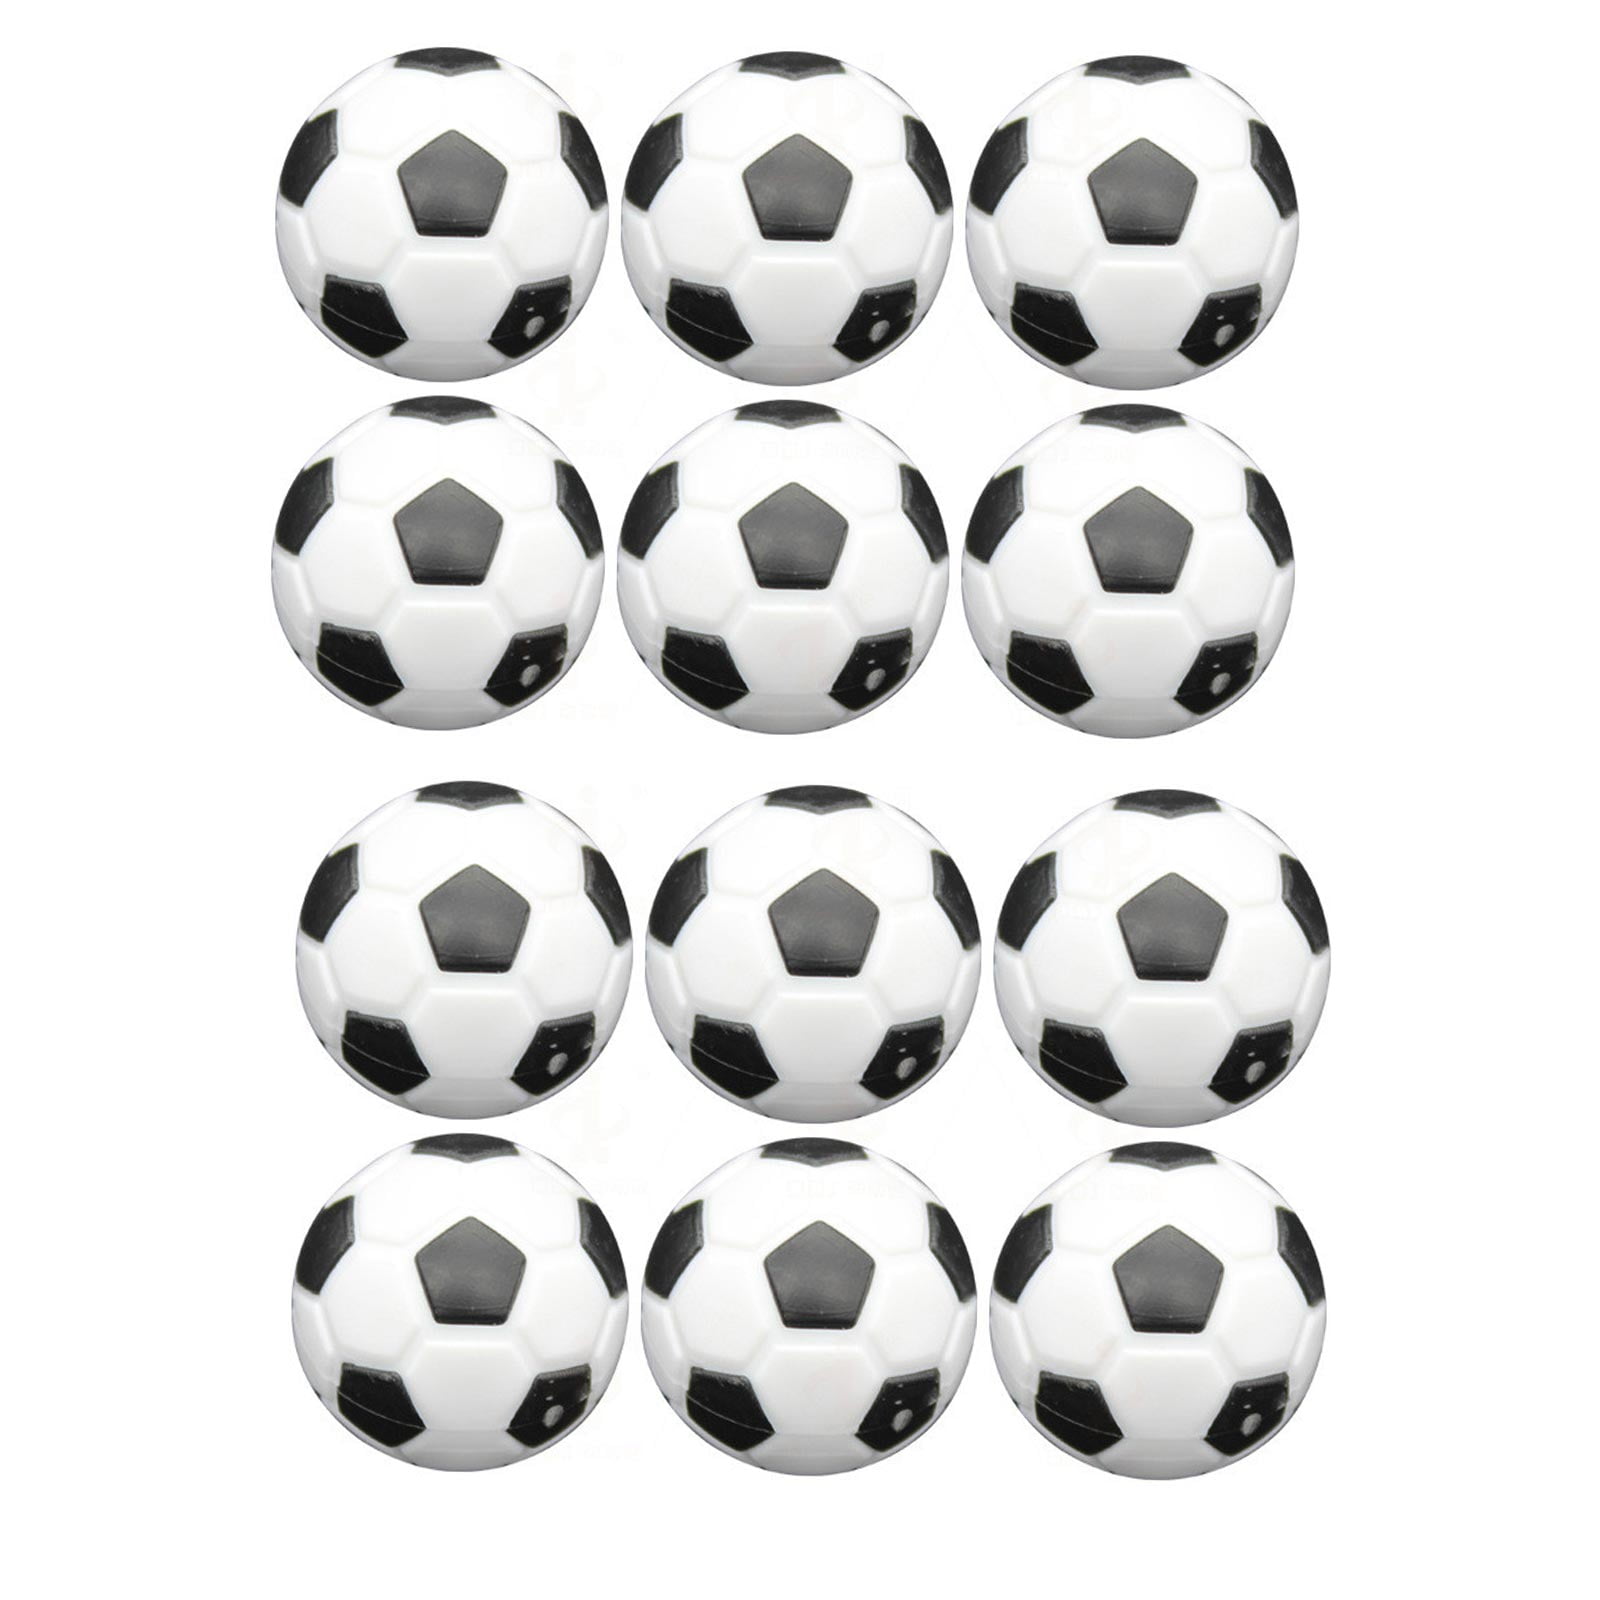 12Pcs Plastic Table Soccer Balls for Foosball Tabletop Game Foosball Accessory Table Soccer Foosballs Replacement Balls 